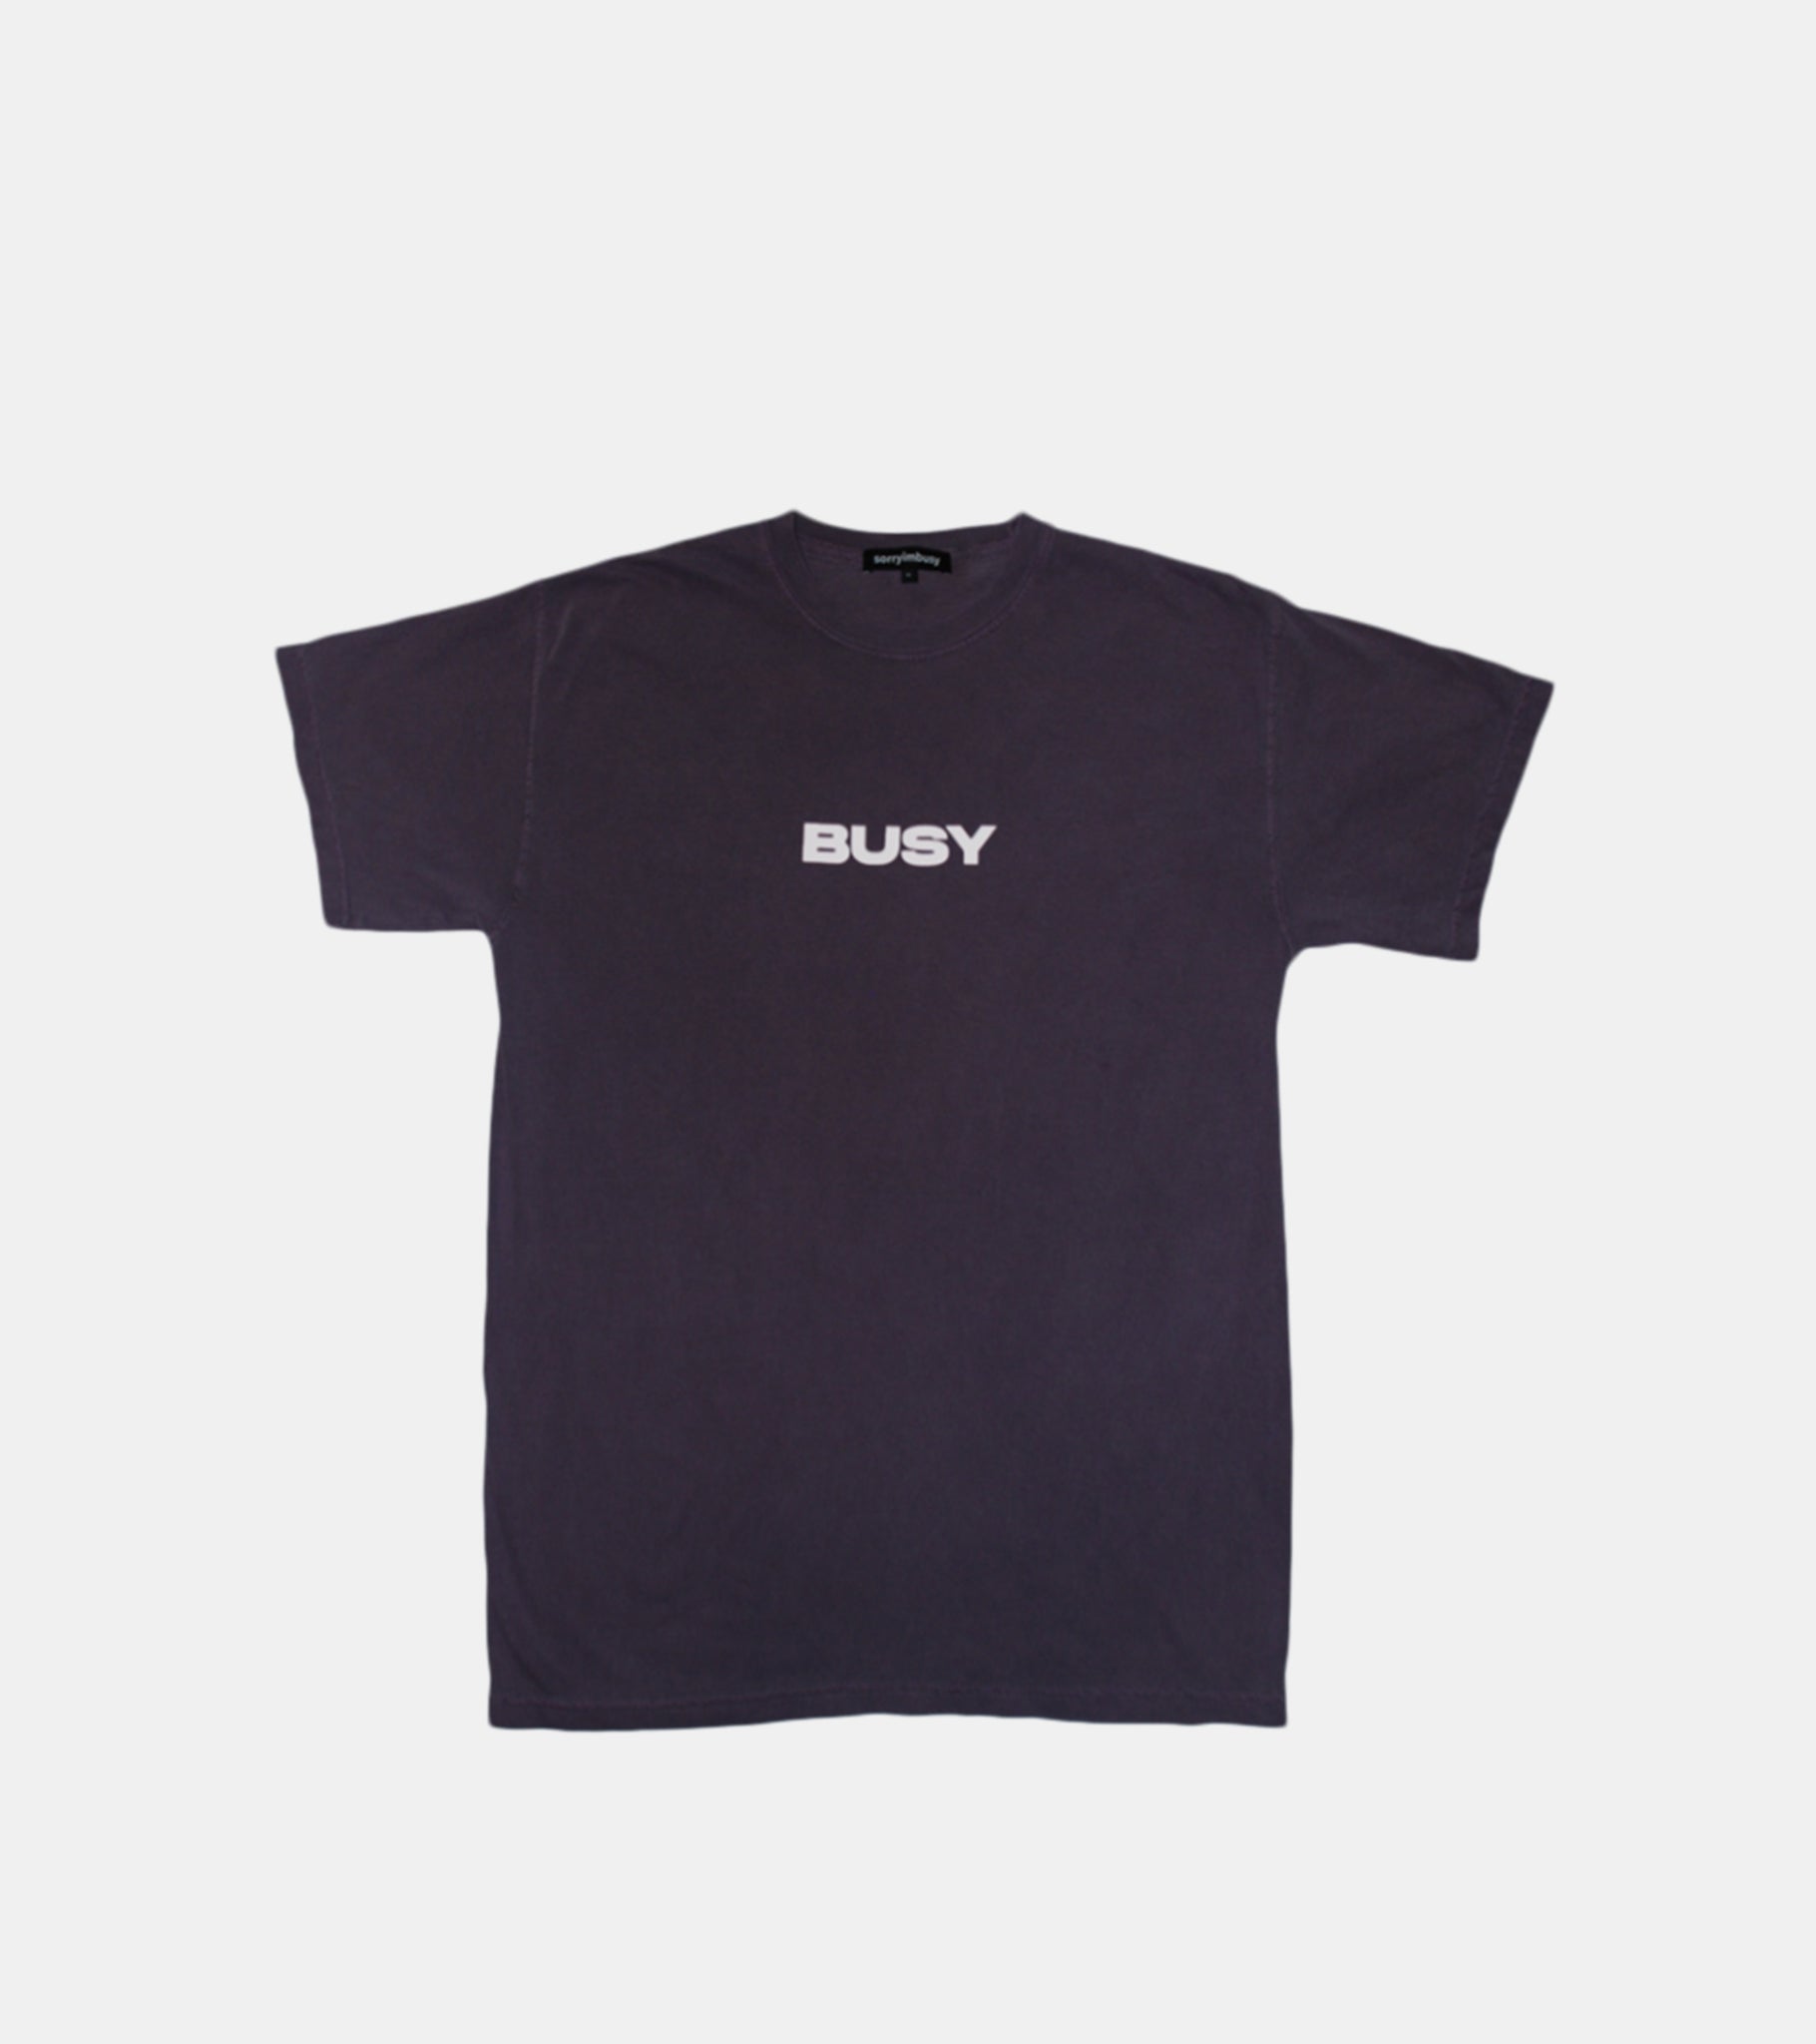 'BUSY' T-Shirt - Wine - SORRYIMBUSY